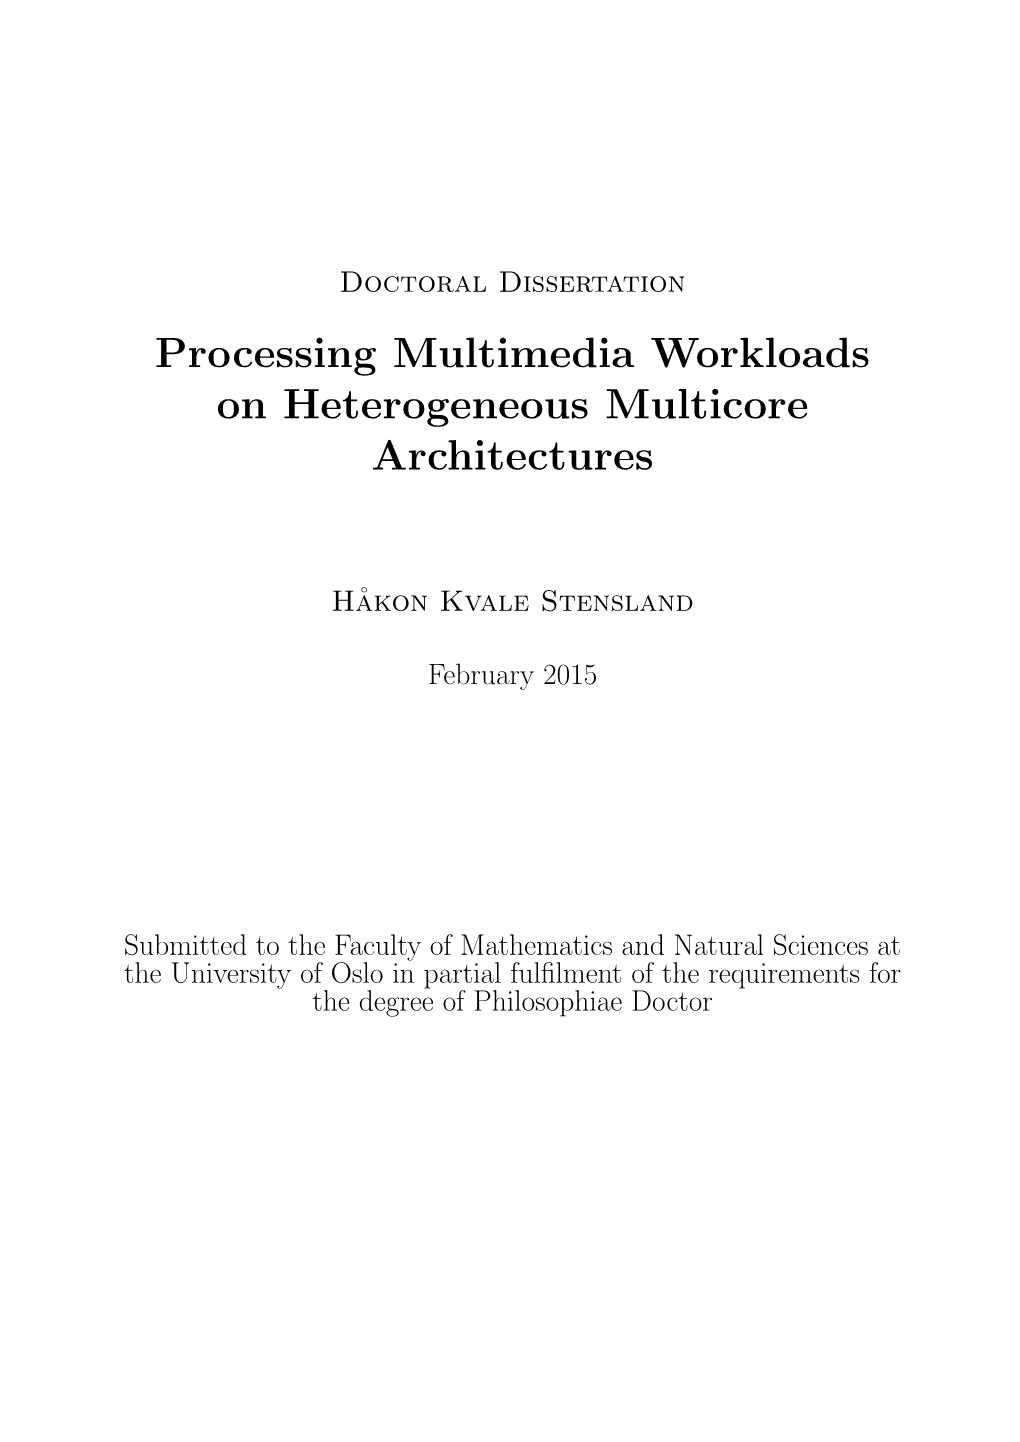 Processing Multimedia Workloads on Heterogeneous Multicore Architectures